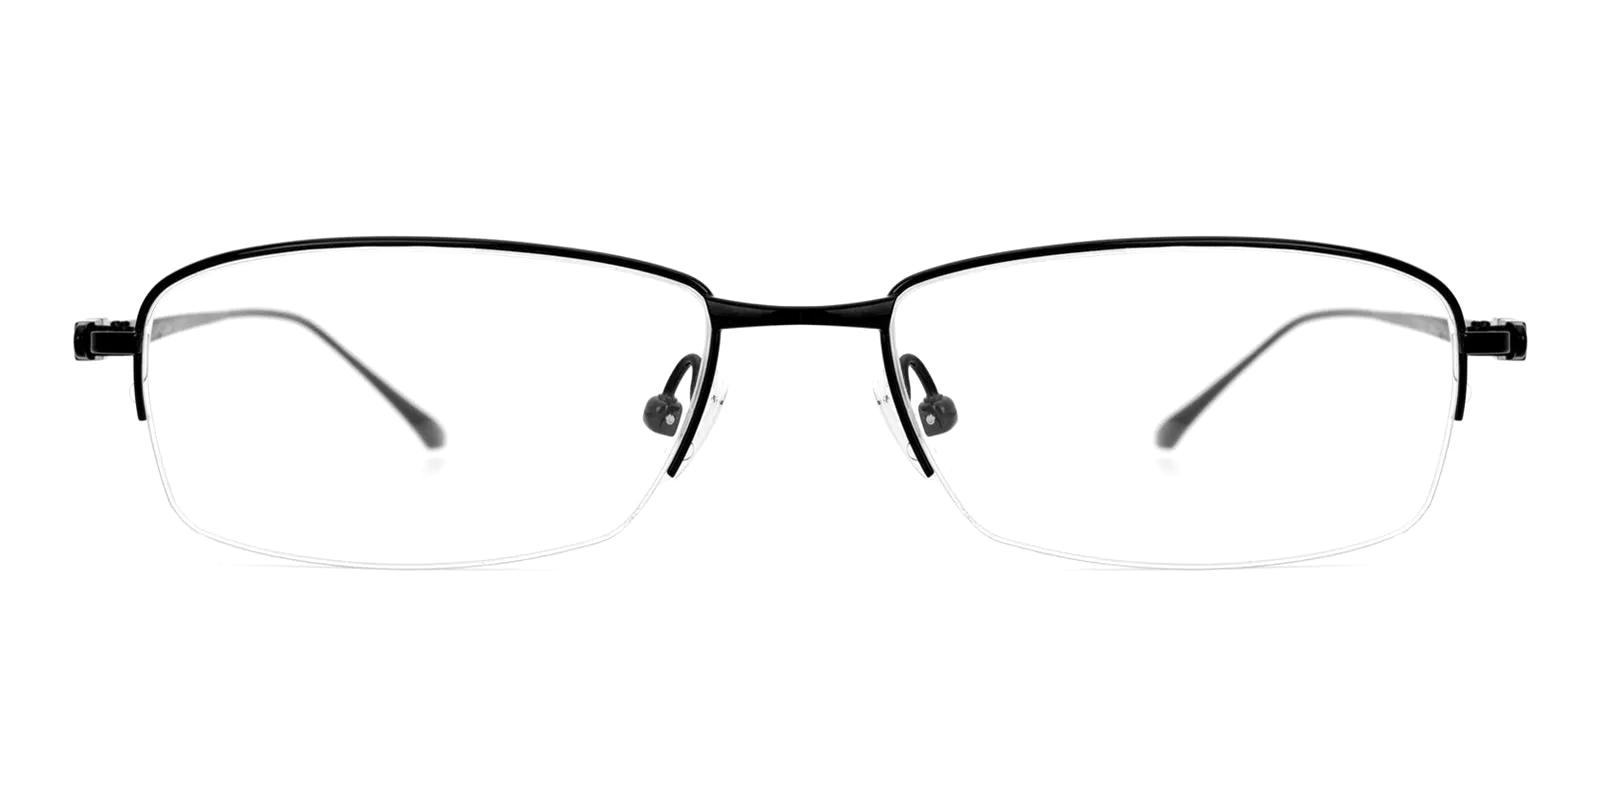 Ploree Black Titanium Eyeglasses , NosePads Frames from ABBE Glasses